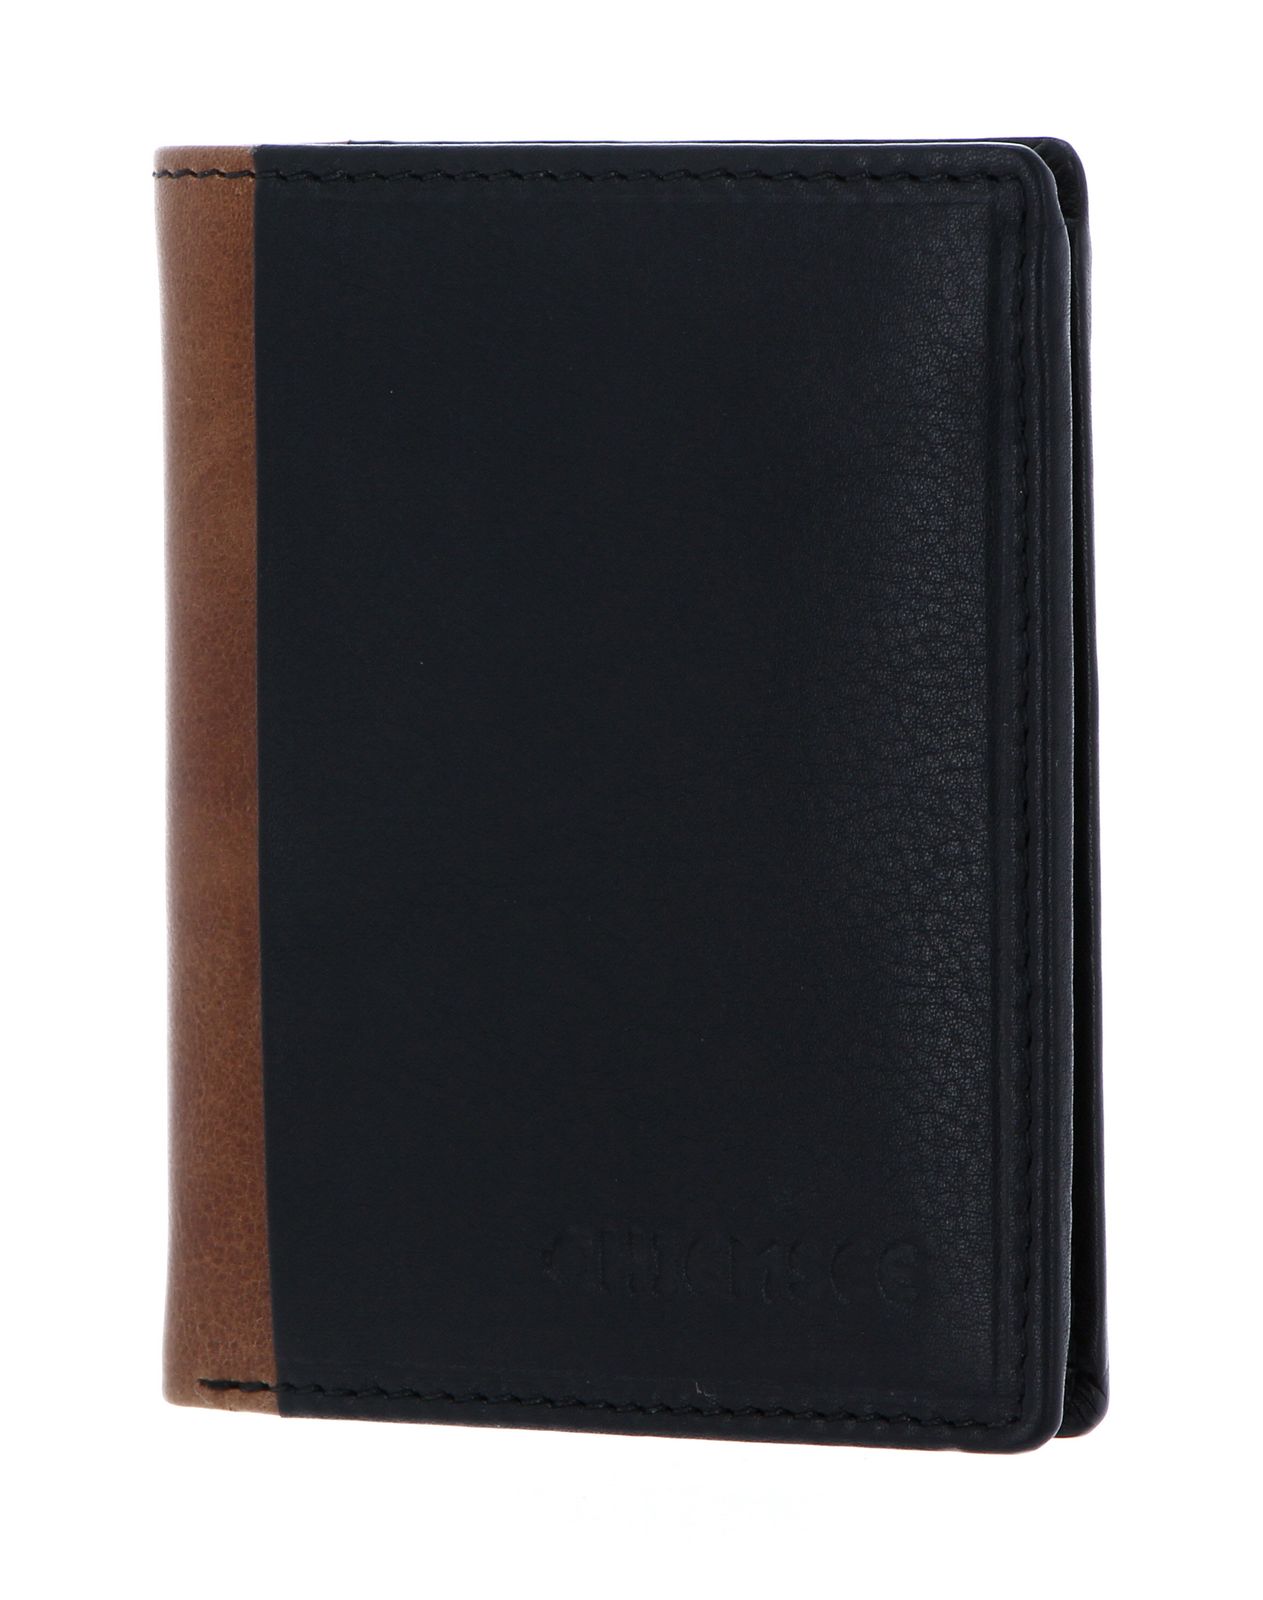 CHIEMSEE Wallet with Flap Black / Cognac | Buy bags, purses & accessories  online | modeherz